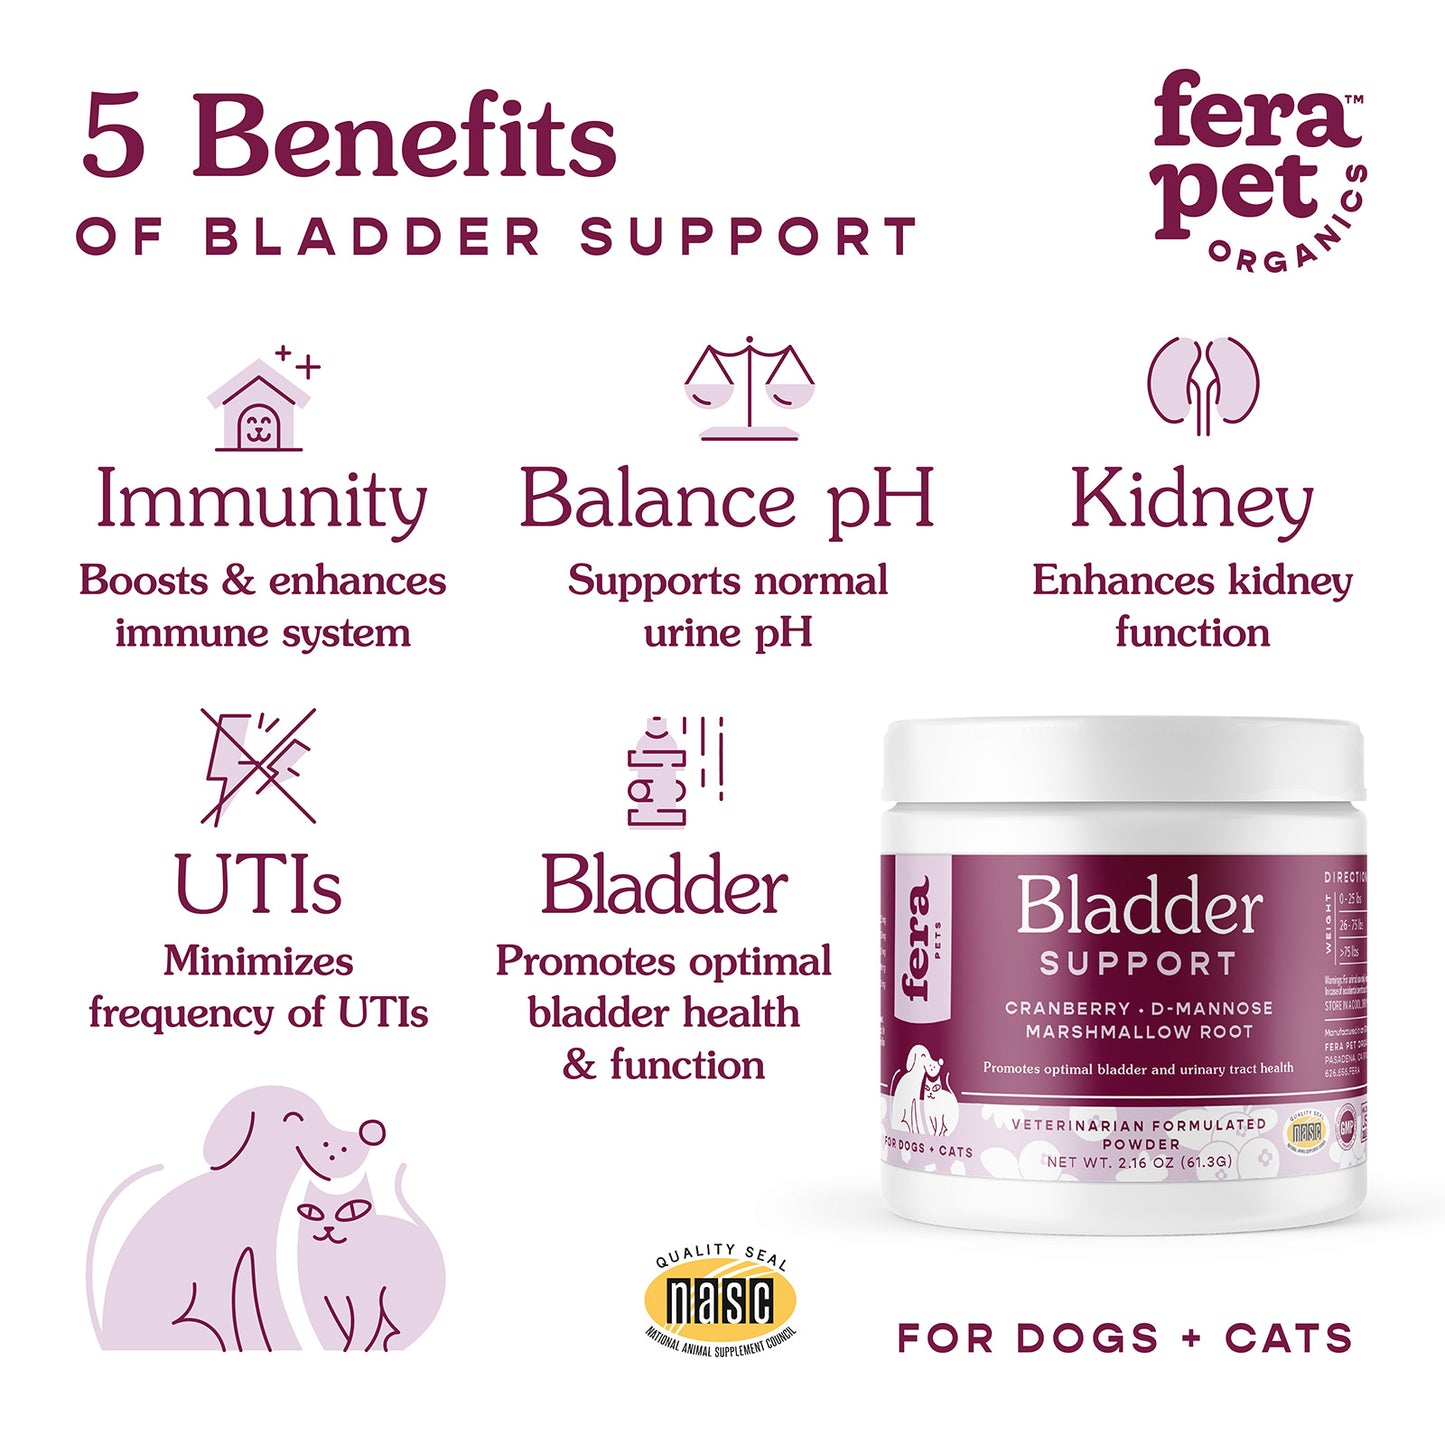 Fera Pet Organics - Bladder Support for Dogs & Cats